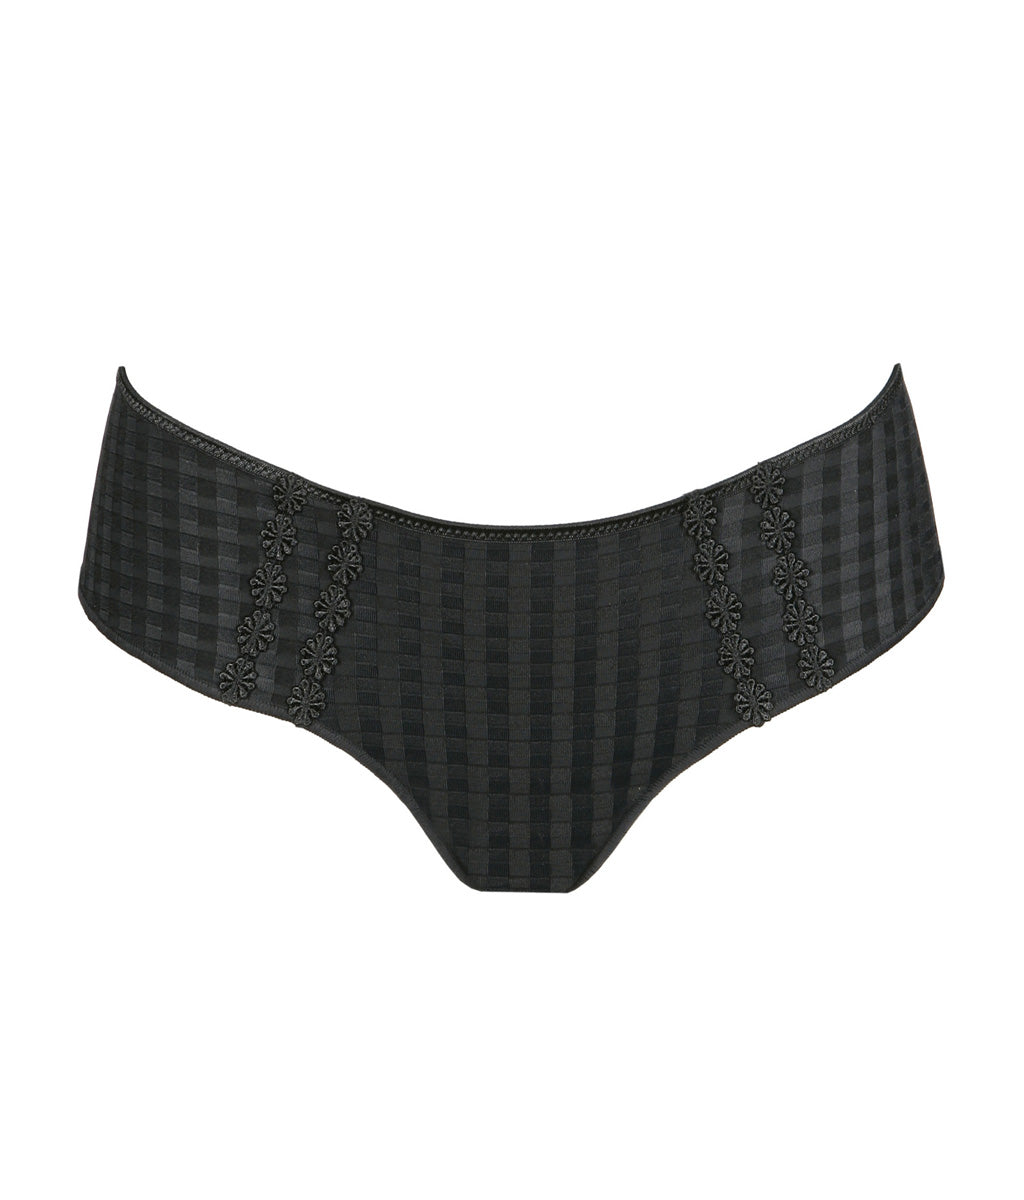 Marie Jo 'Avero' (Black) Hotpants - Sandra Dee - Product Shot - Front